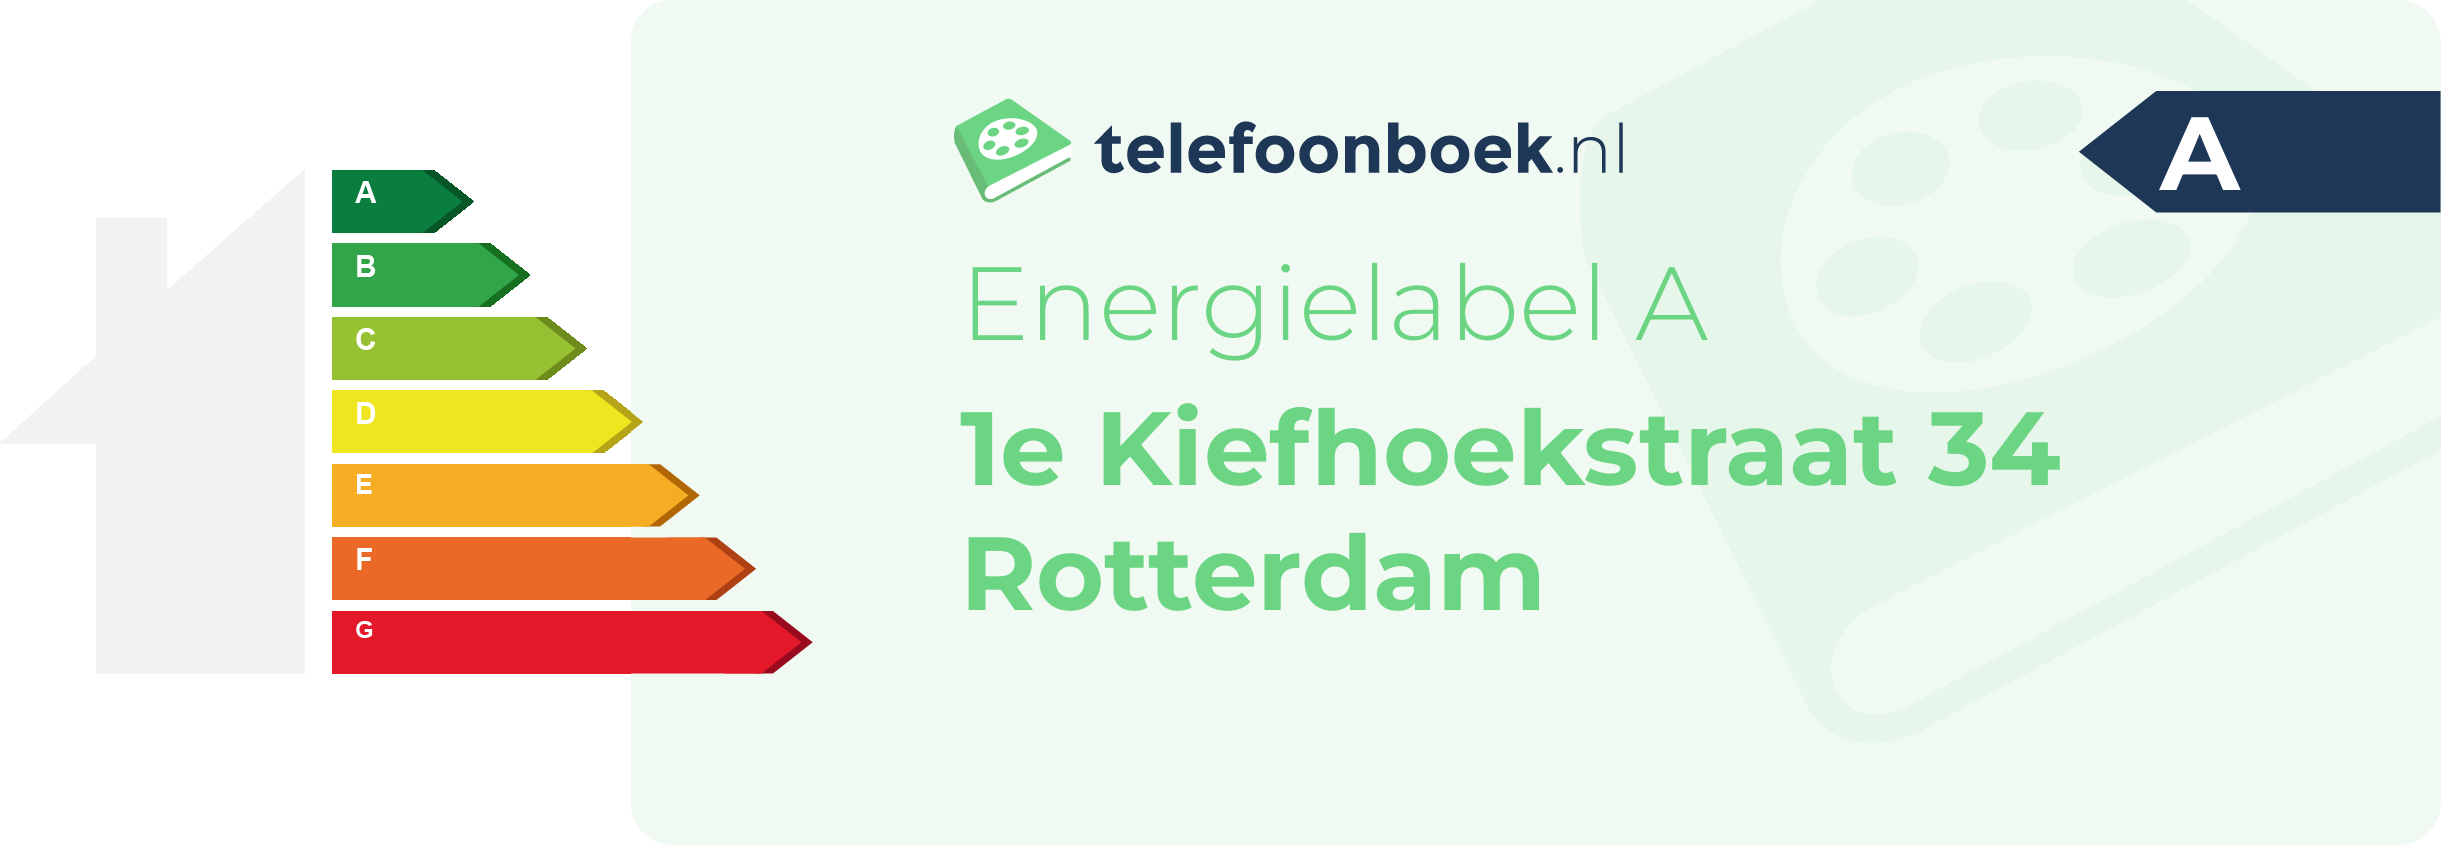 Energielabel 1e Kiefhoekstraat 34 Rotterdam